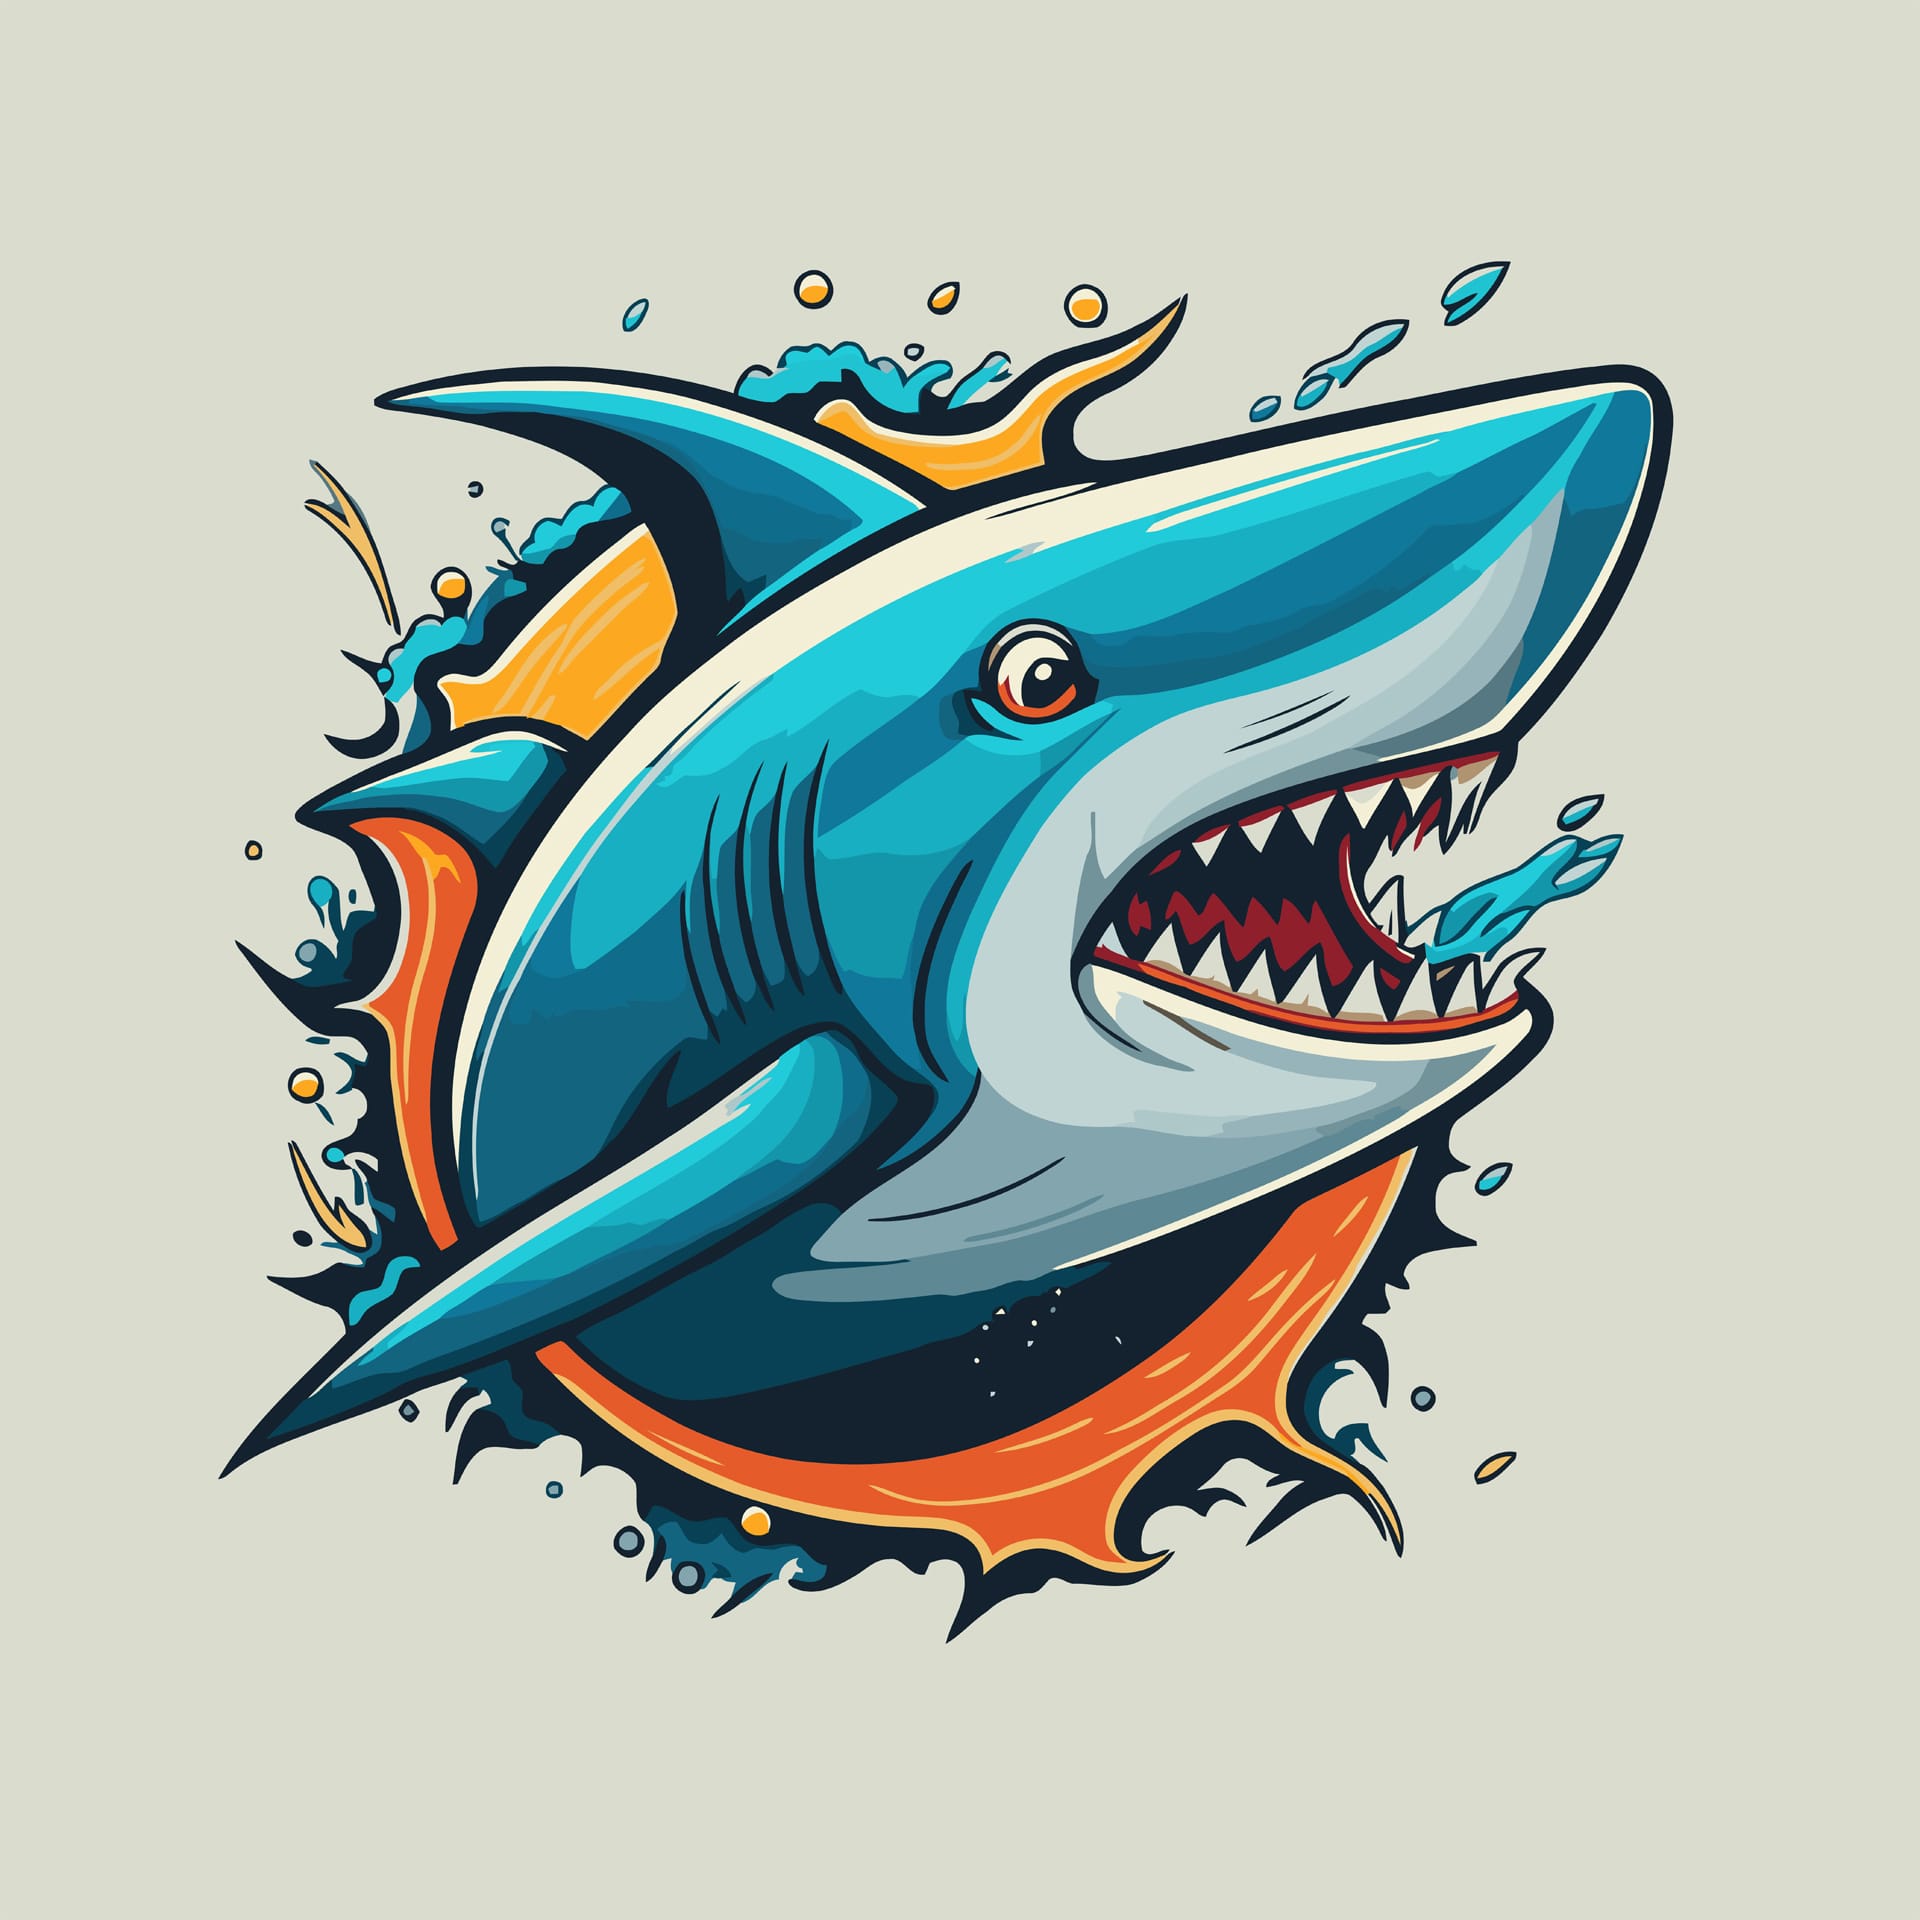 Angry blue shark logo character mascot icon funny cartoon image